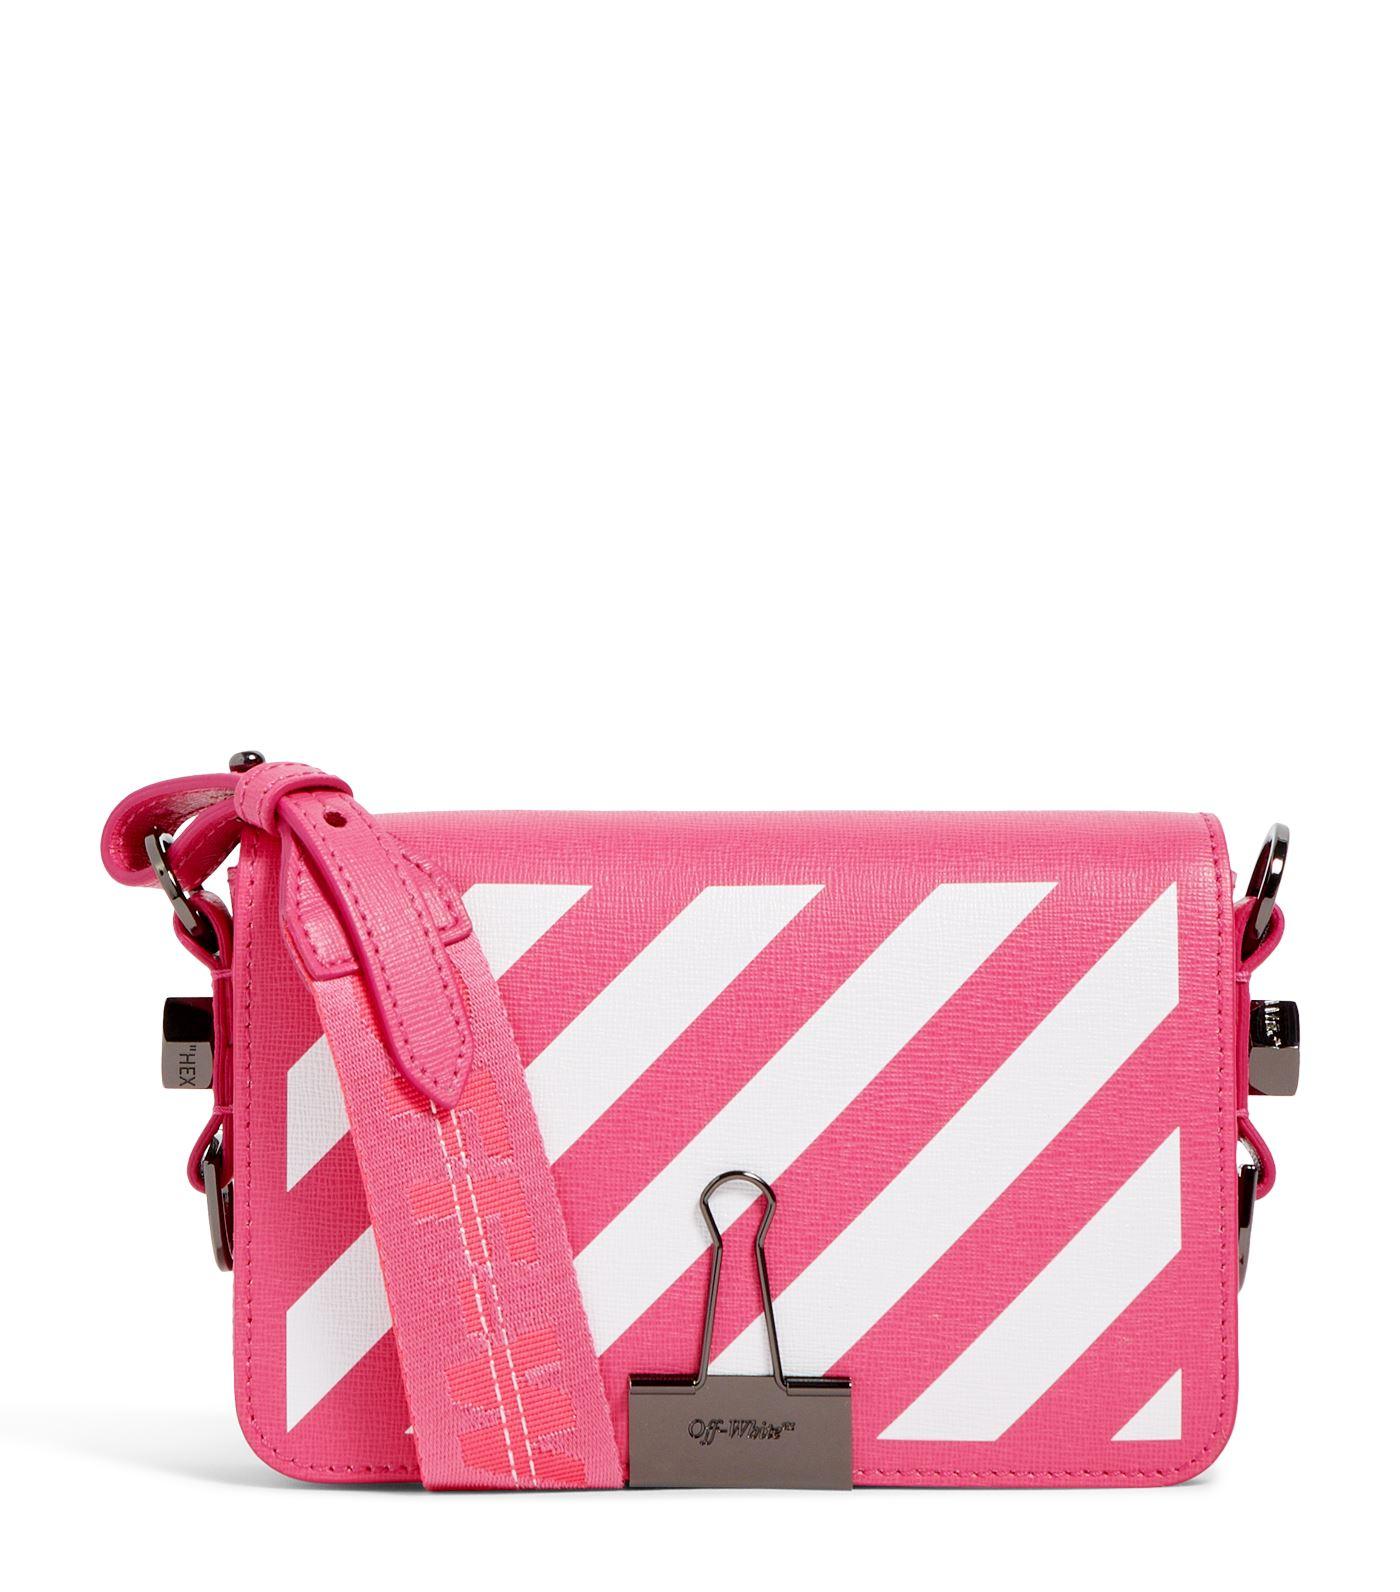 Off-White c/o Virgil Abloh Mini Leather Binder Clip Bag in Pink - Lyst